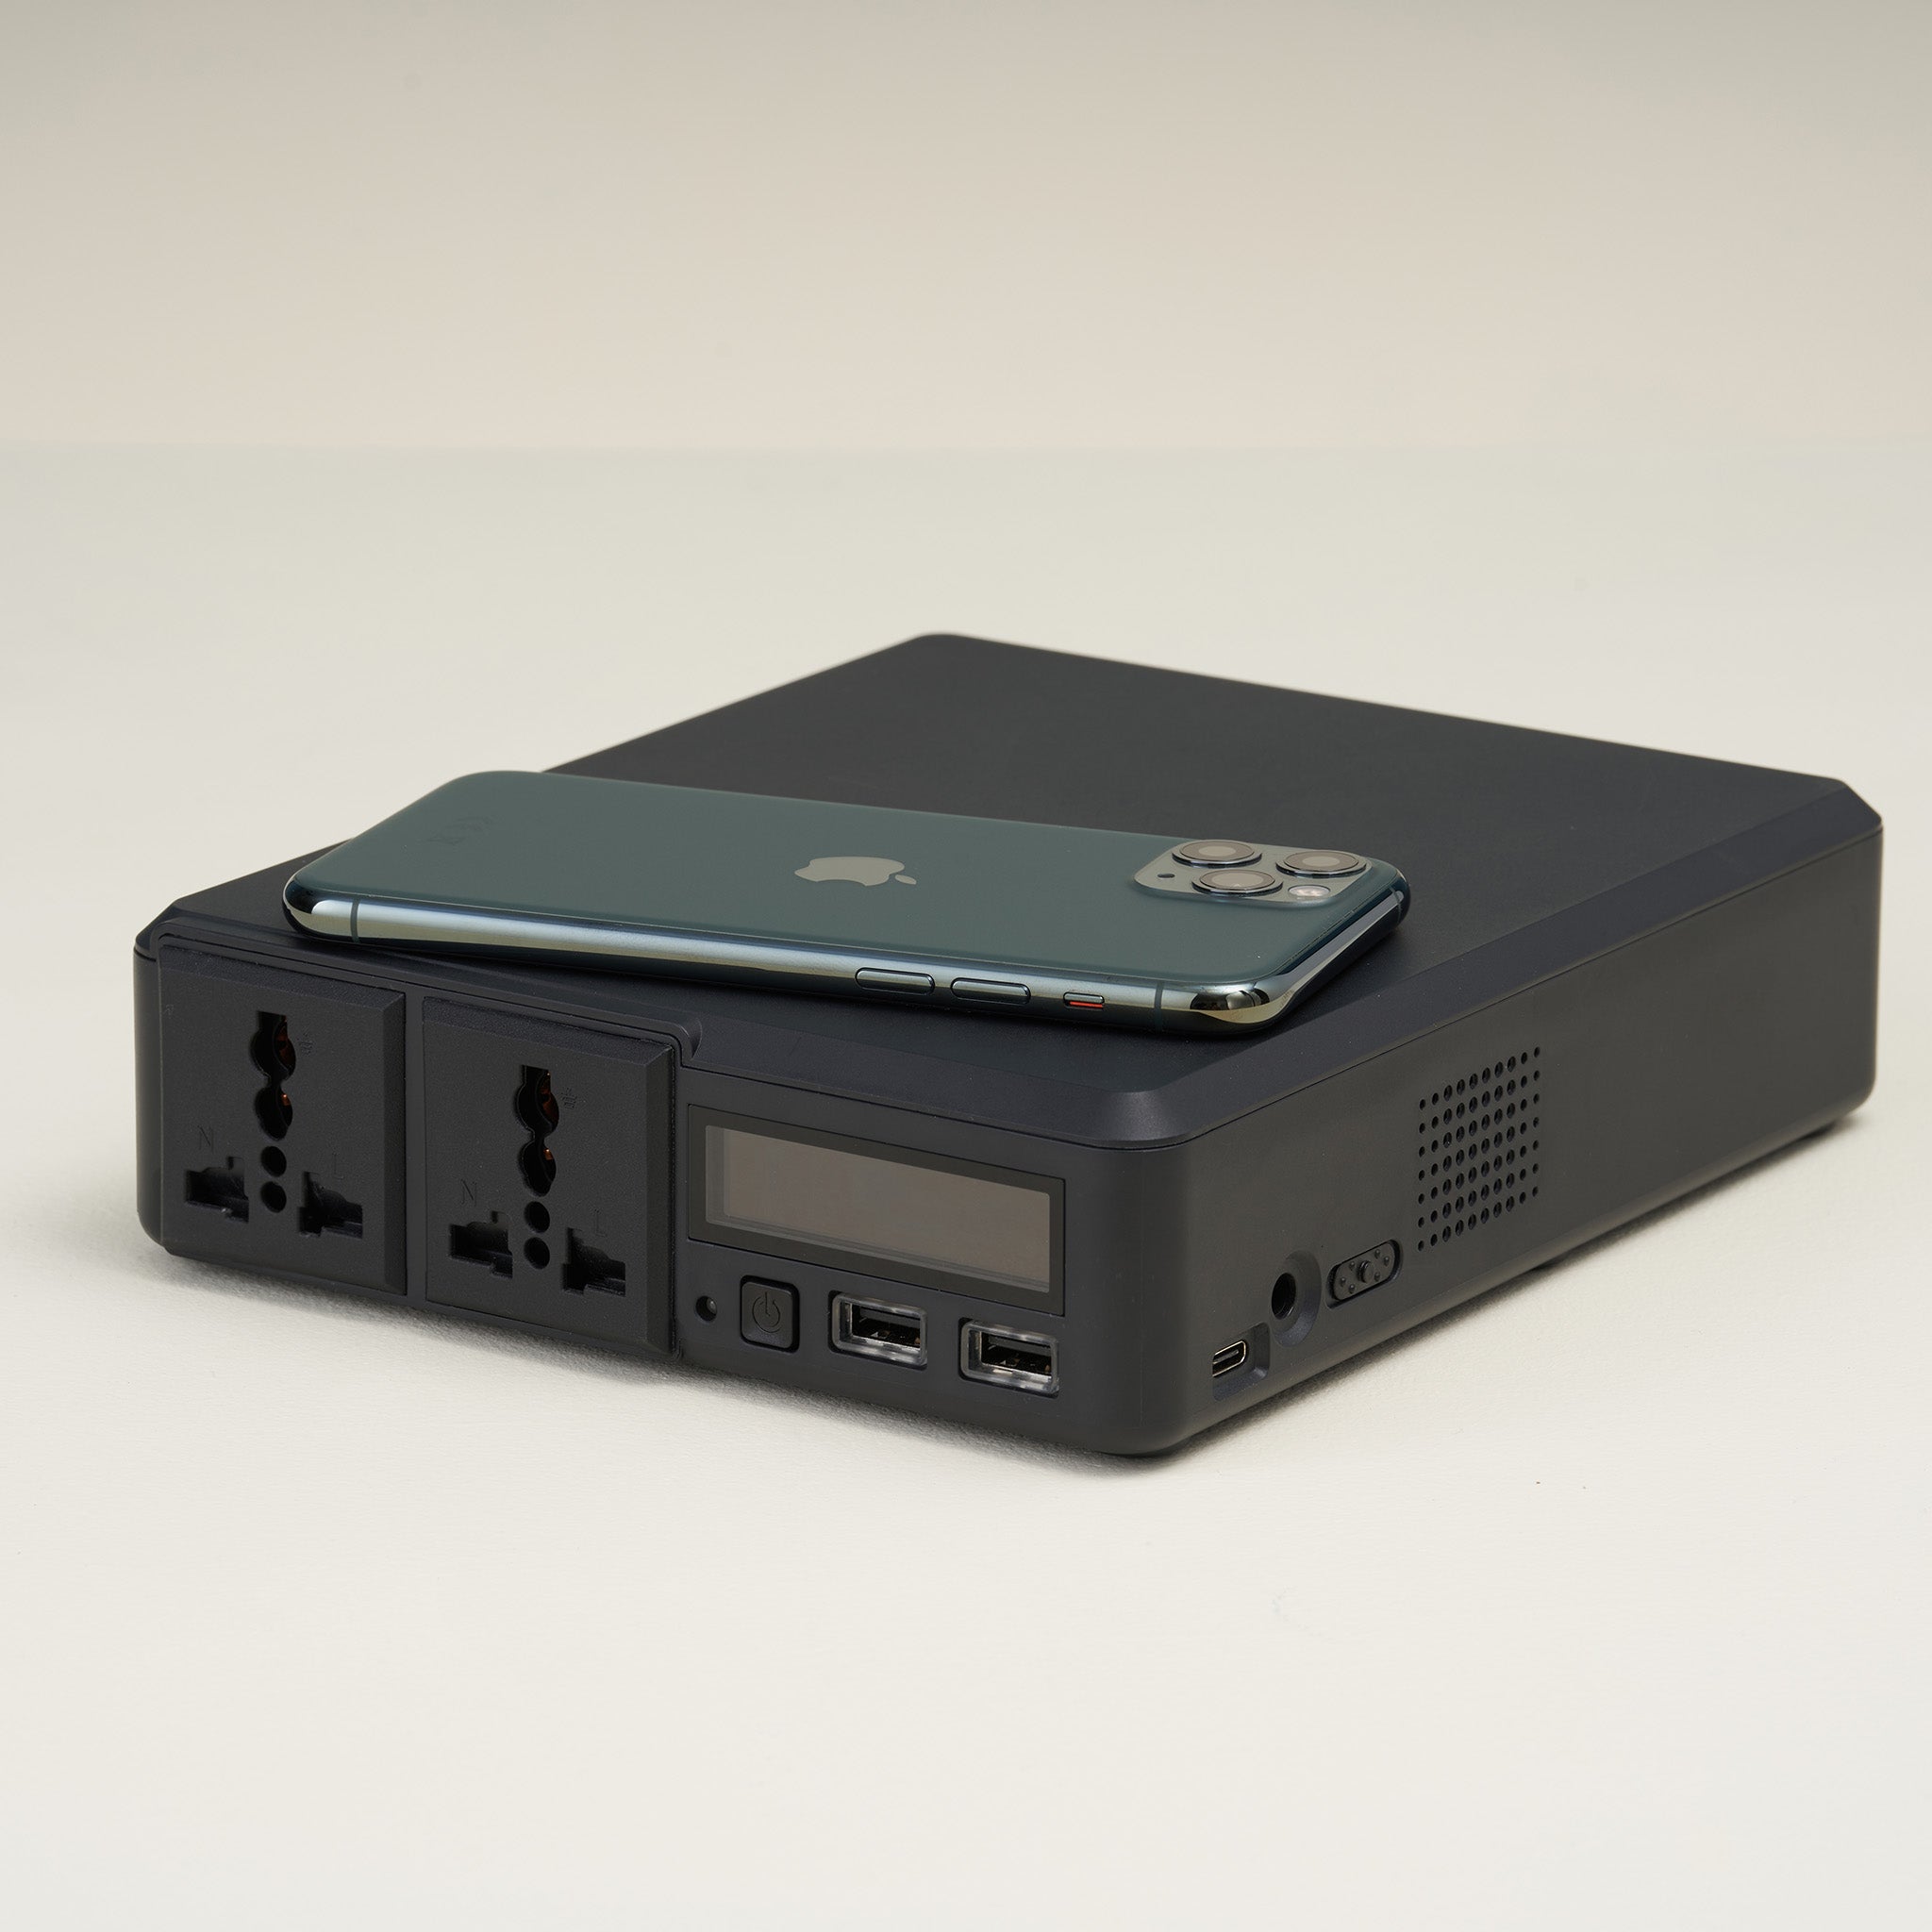 Homie - Portable AC/DC/USB/Wireless Power Supply with Digital Display